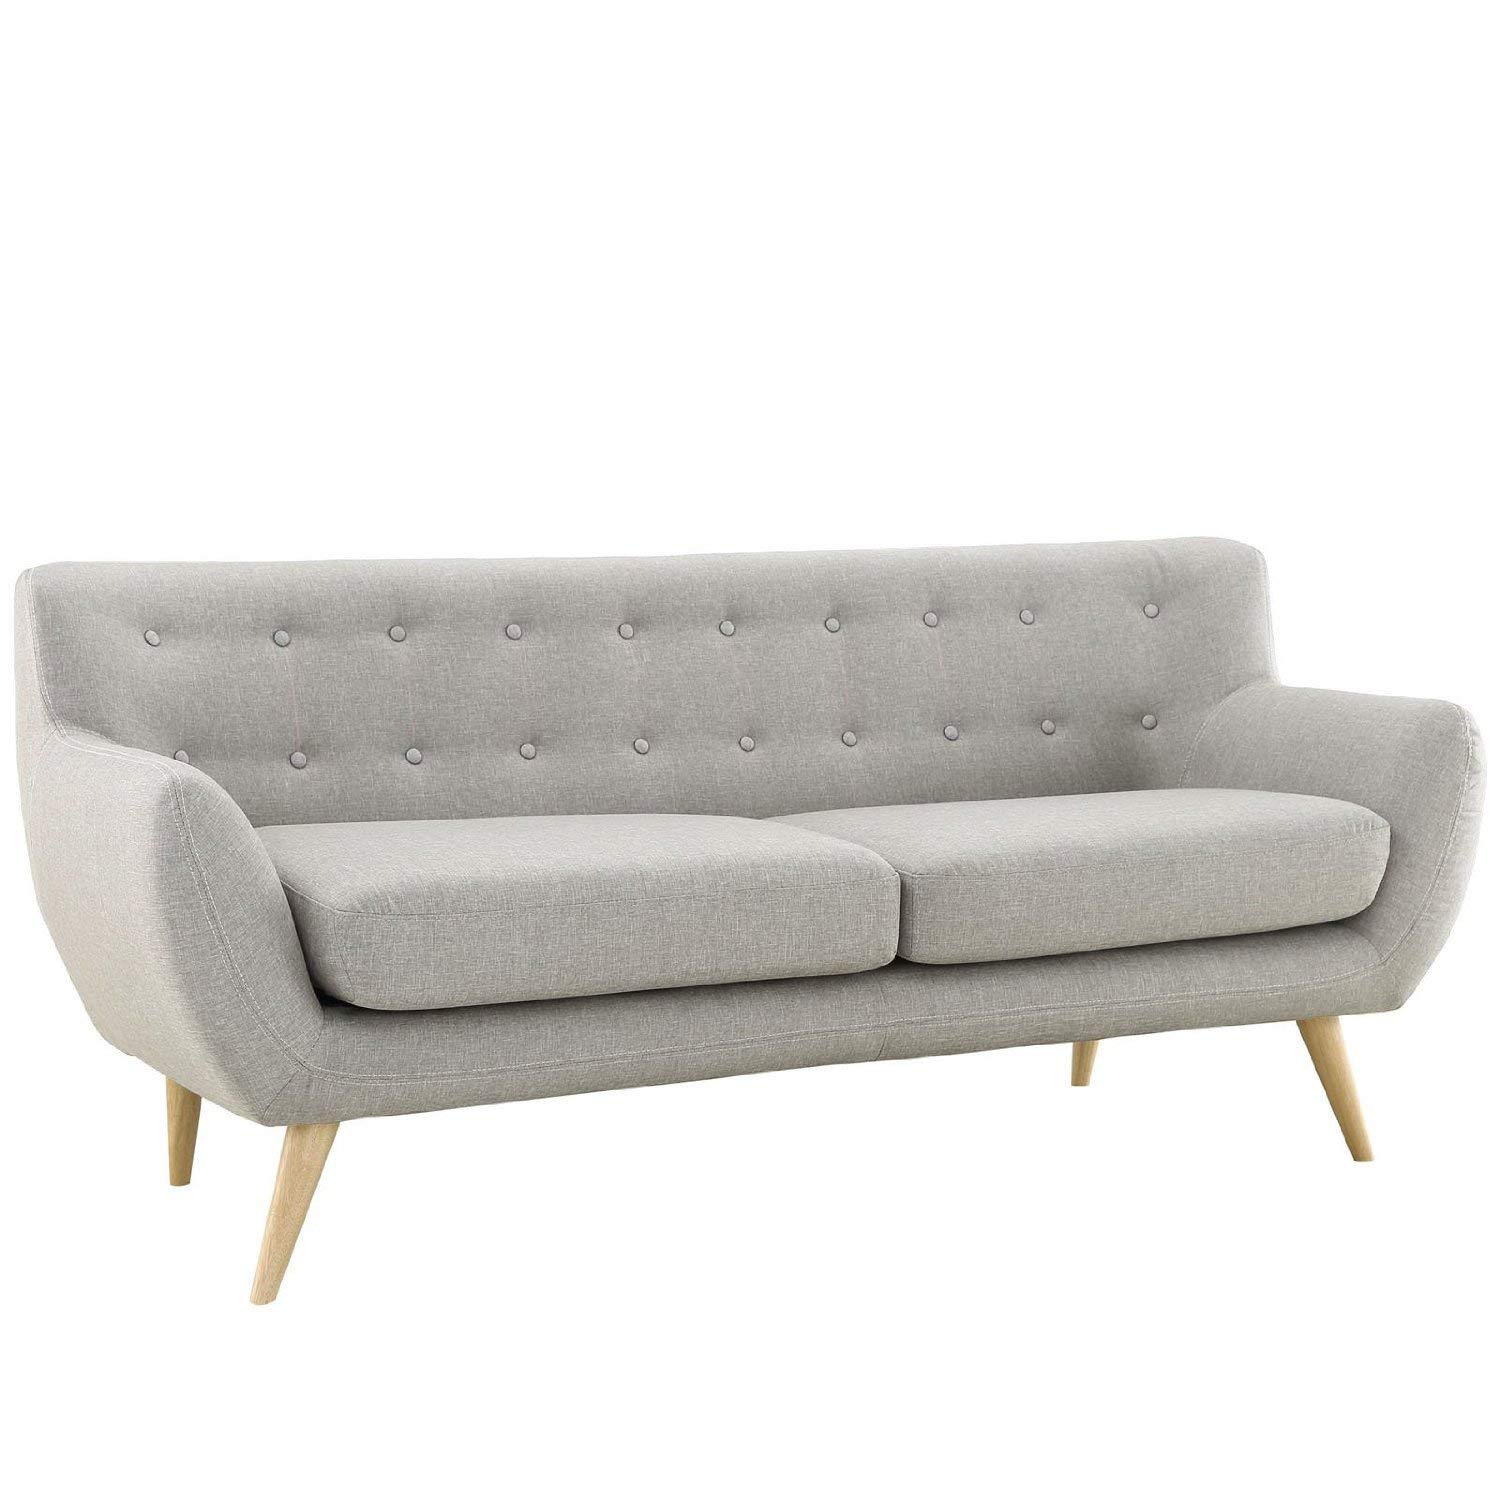 Love seat sofa amazon.com: divano roma furniture modern style sofa / love seat, 2 seater - ILKXIKB